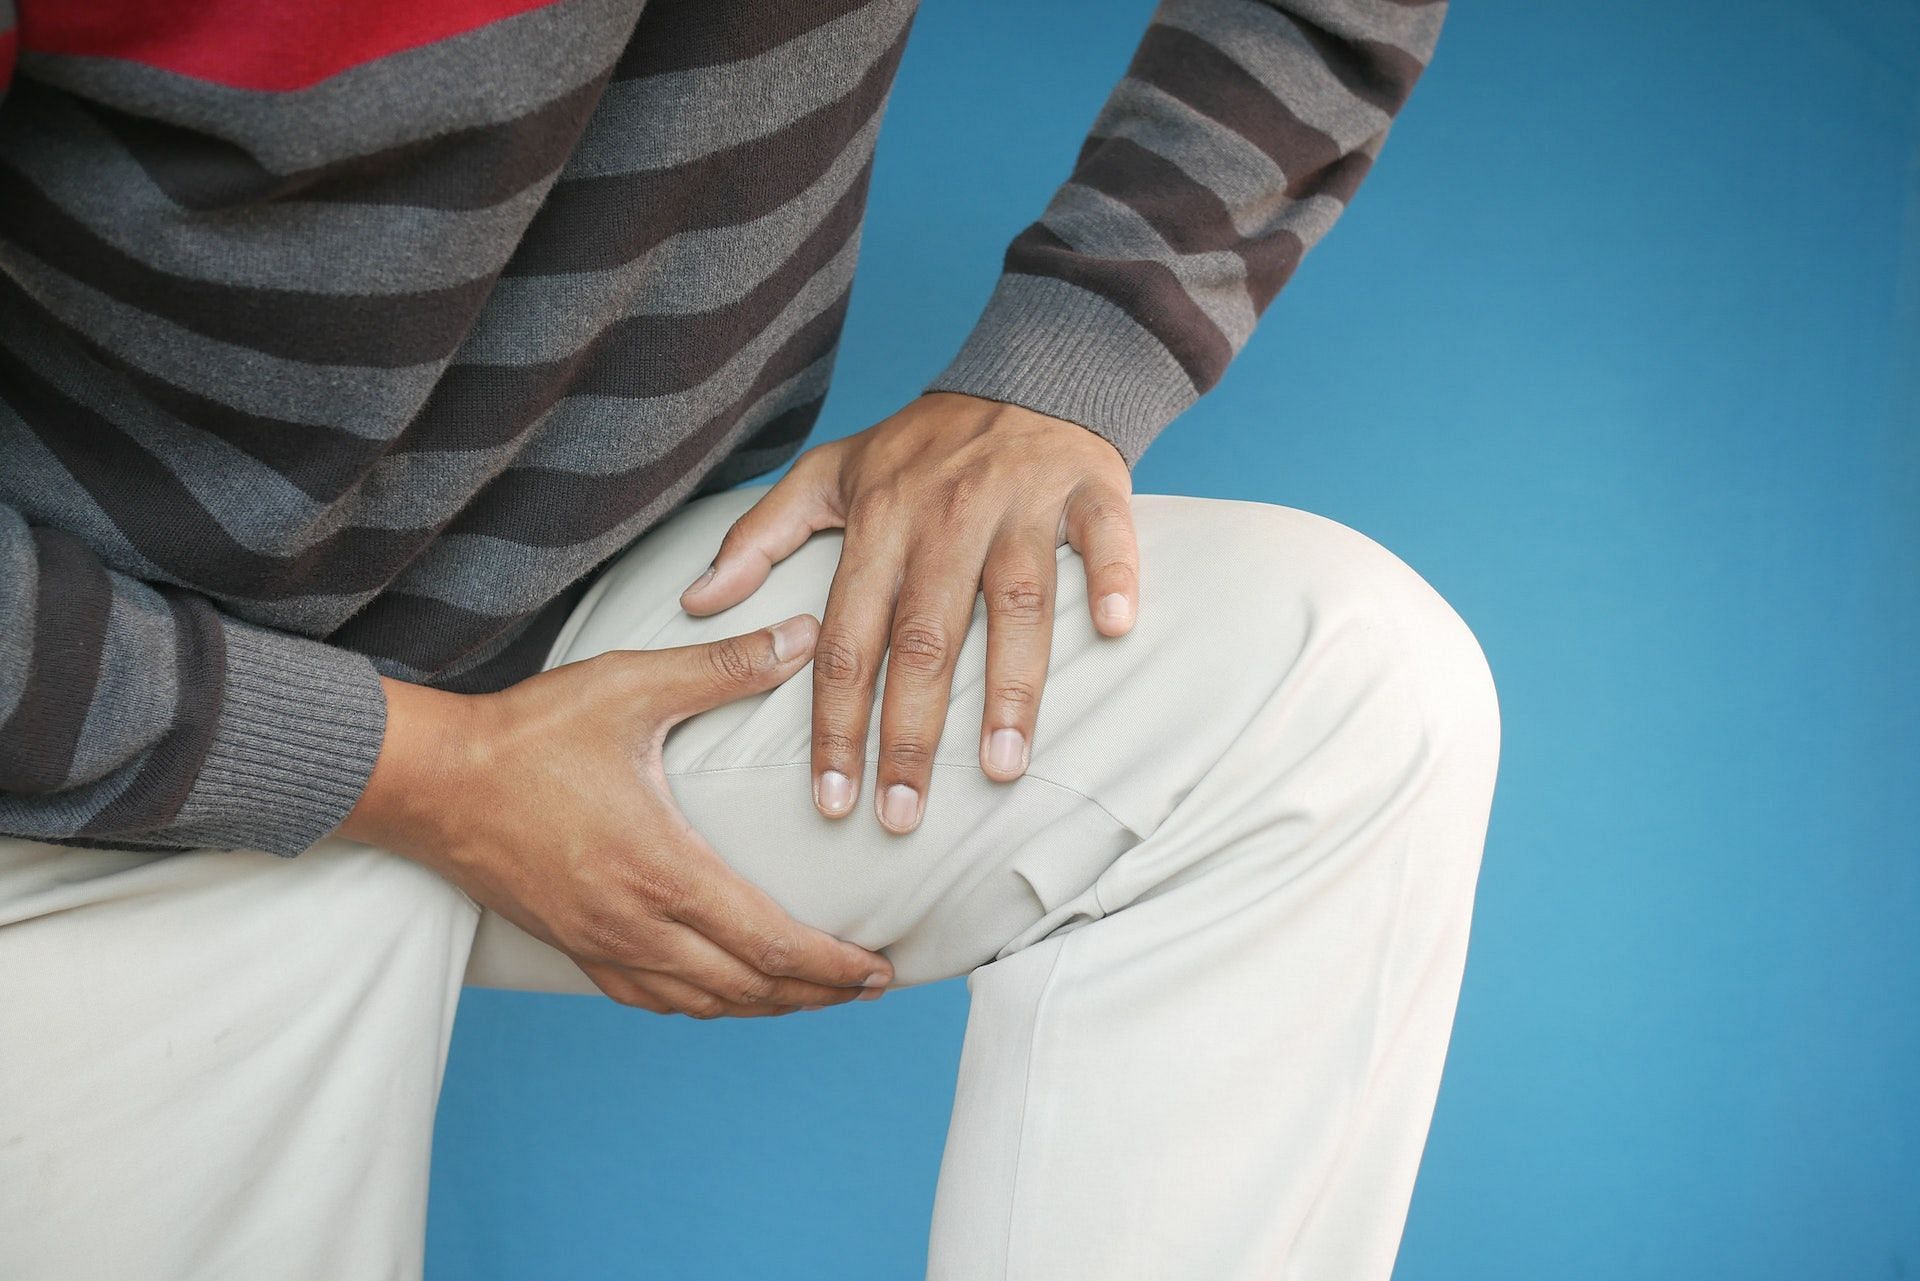 Hip pain can affect the leg muscles, too. (Photo via Pexels/Towfiqu barbhuiya)